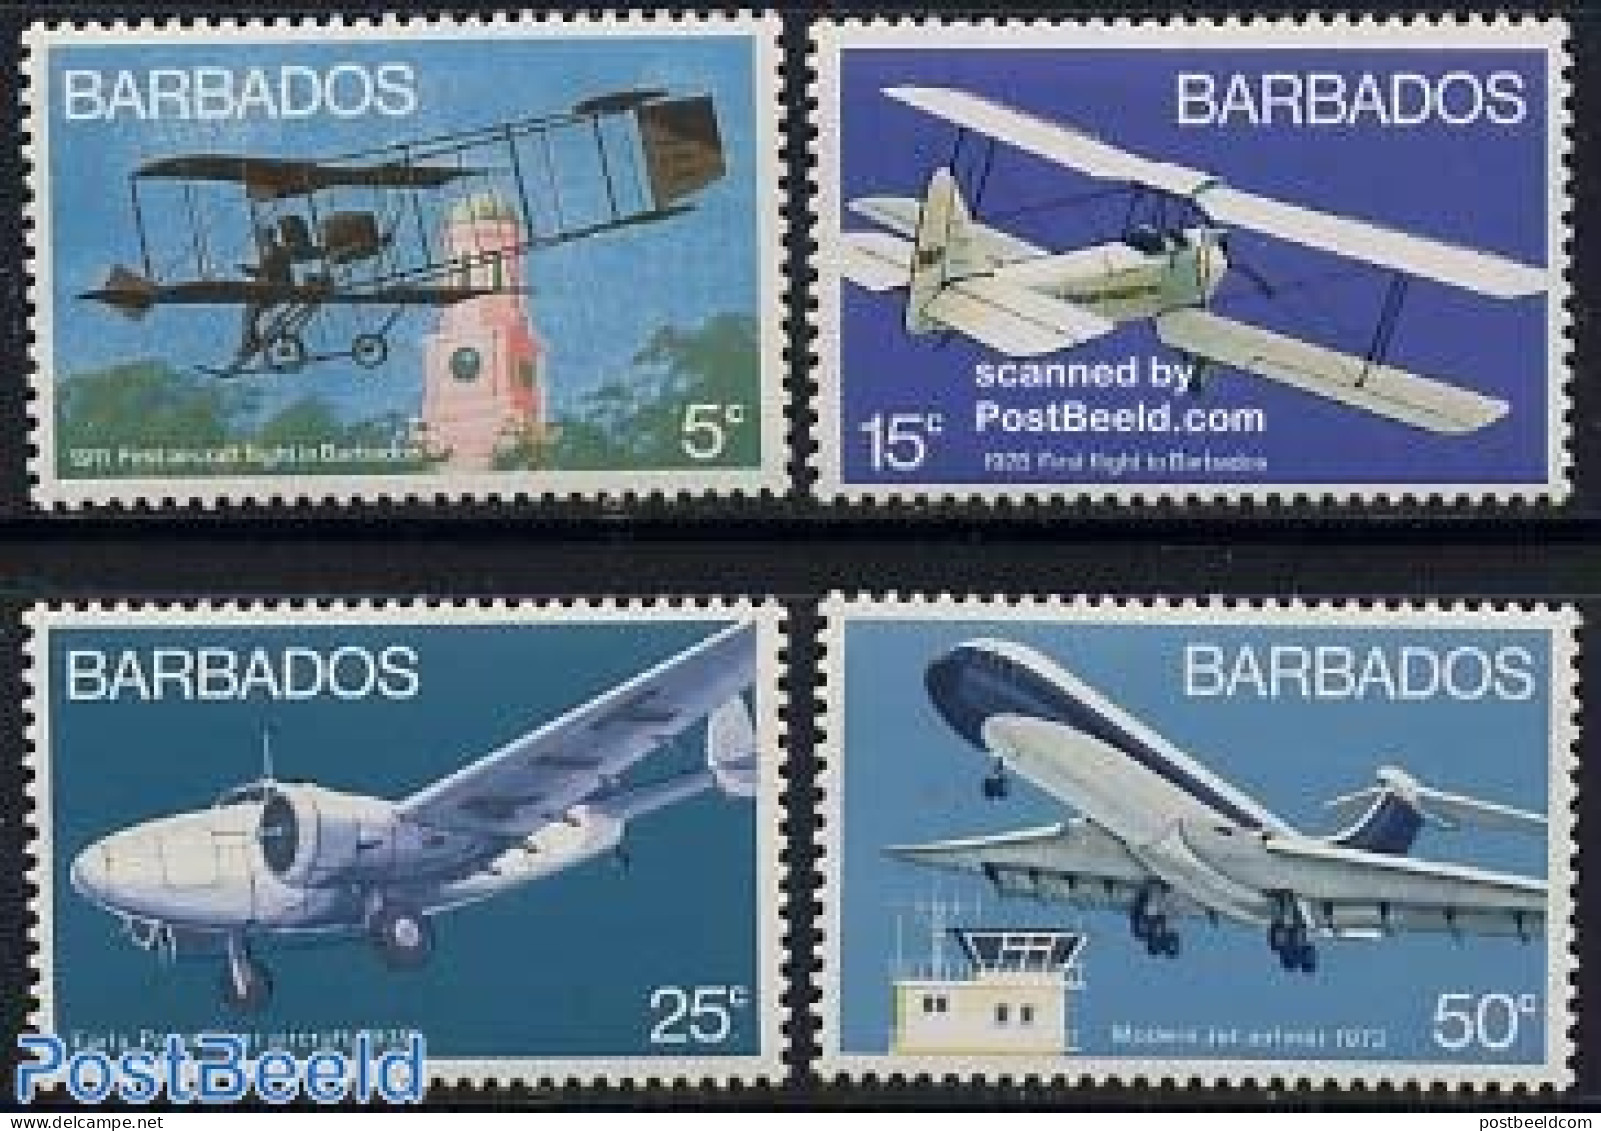 Barbados 1973 Air Pioneers 4v, Mint NH, Transport - Aircraft & Aviation - Avions